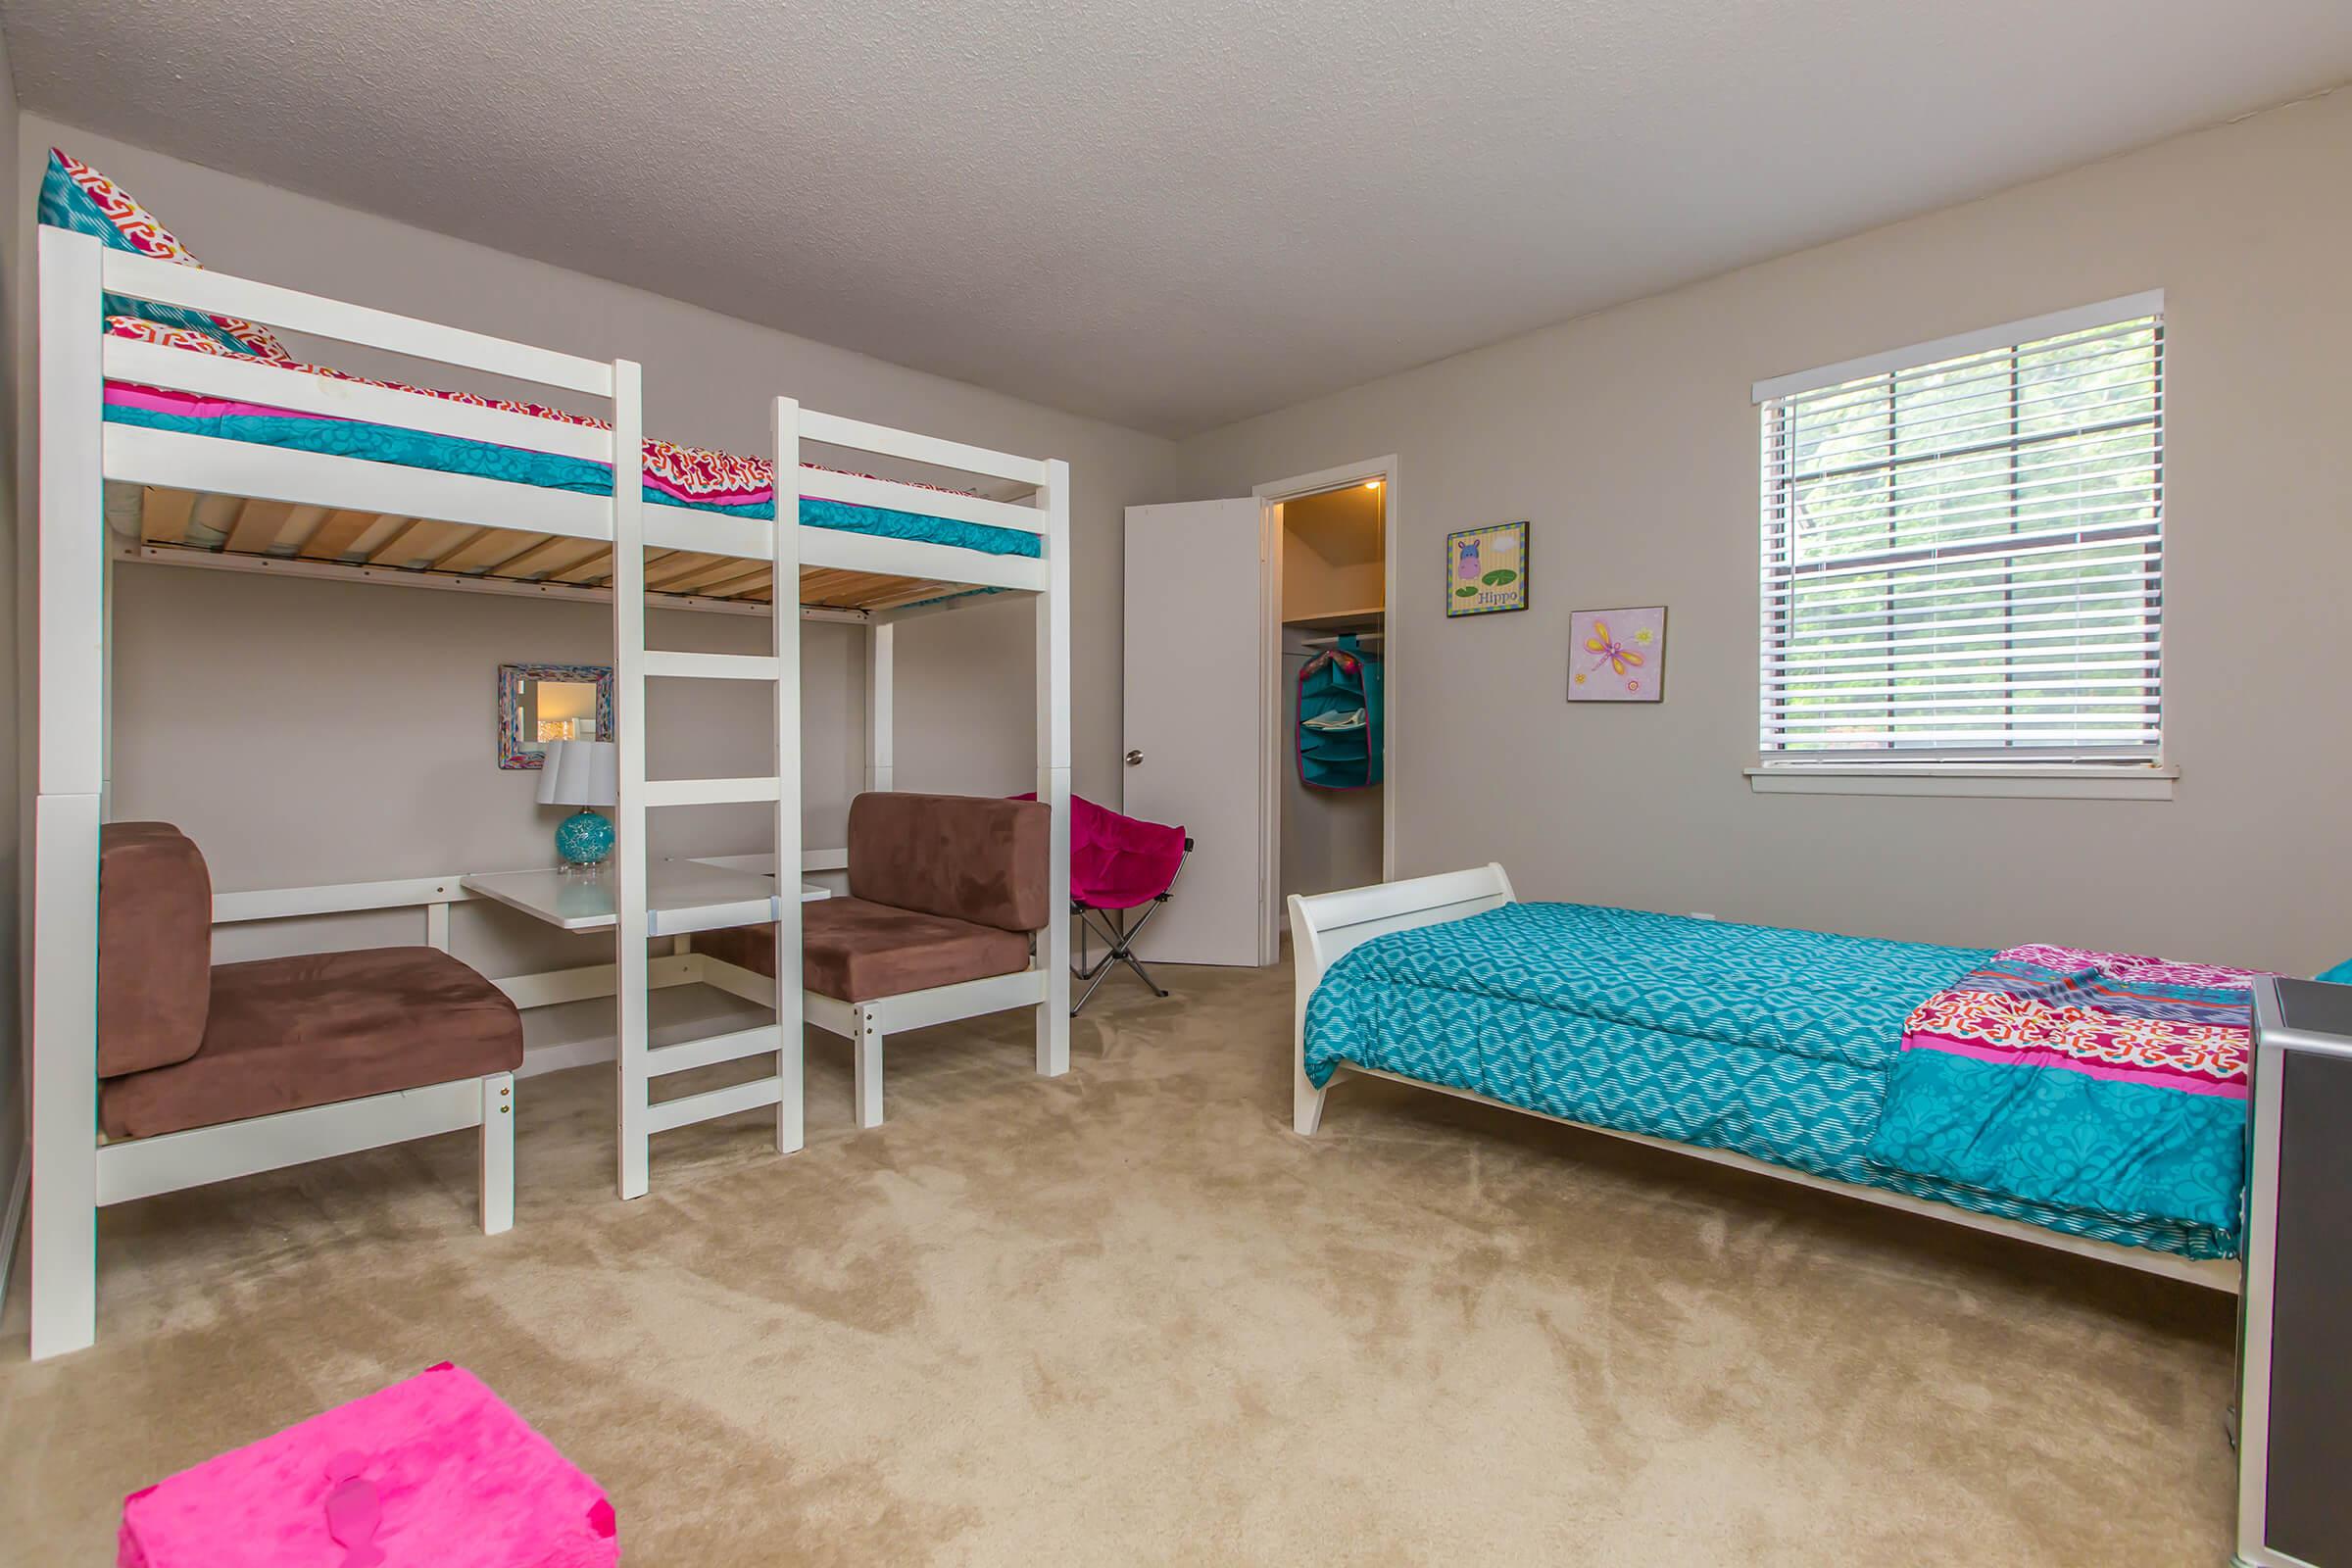 Bedroom - Lakeside Place Apartments - Greenville - South Carolina